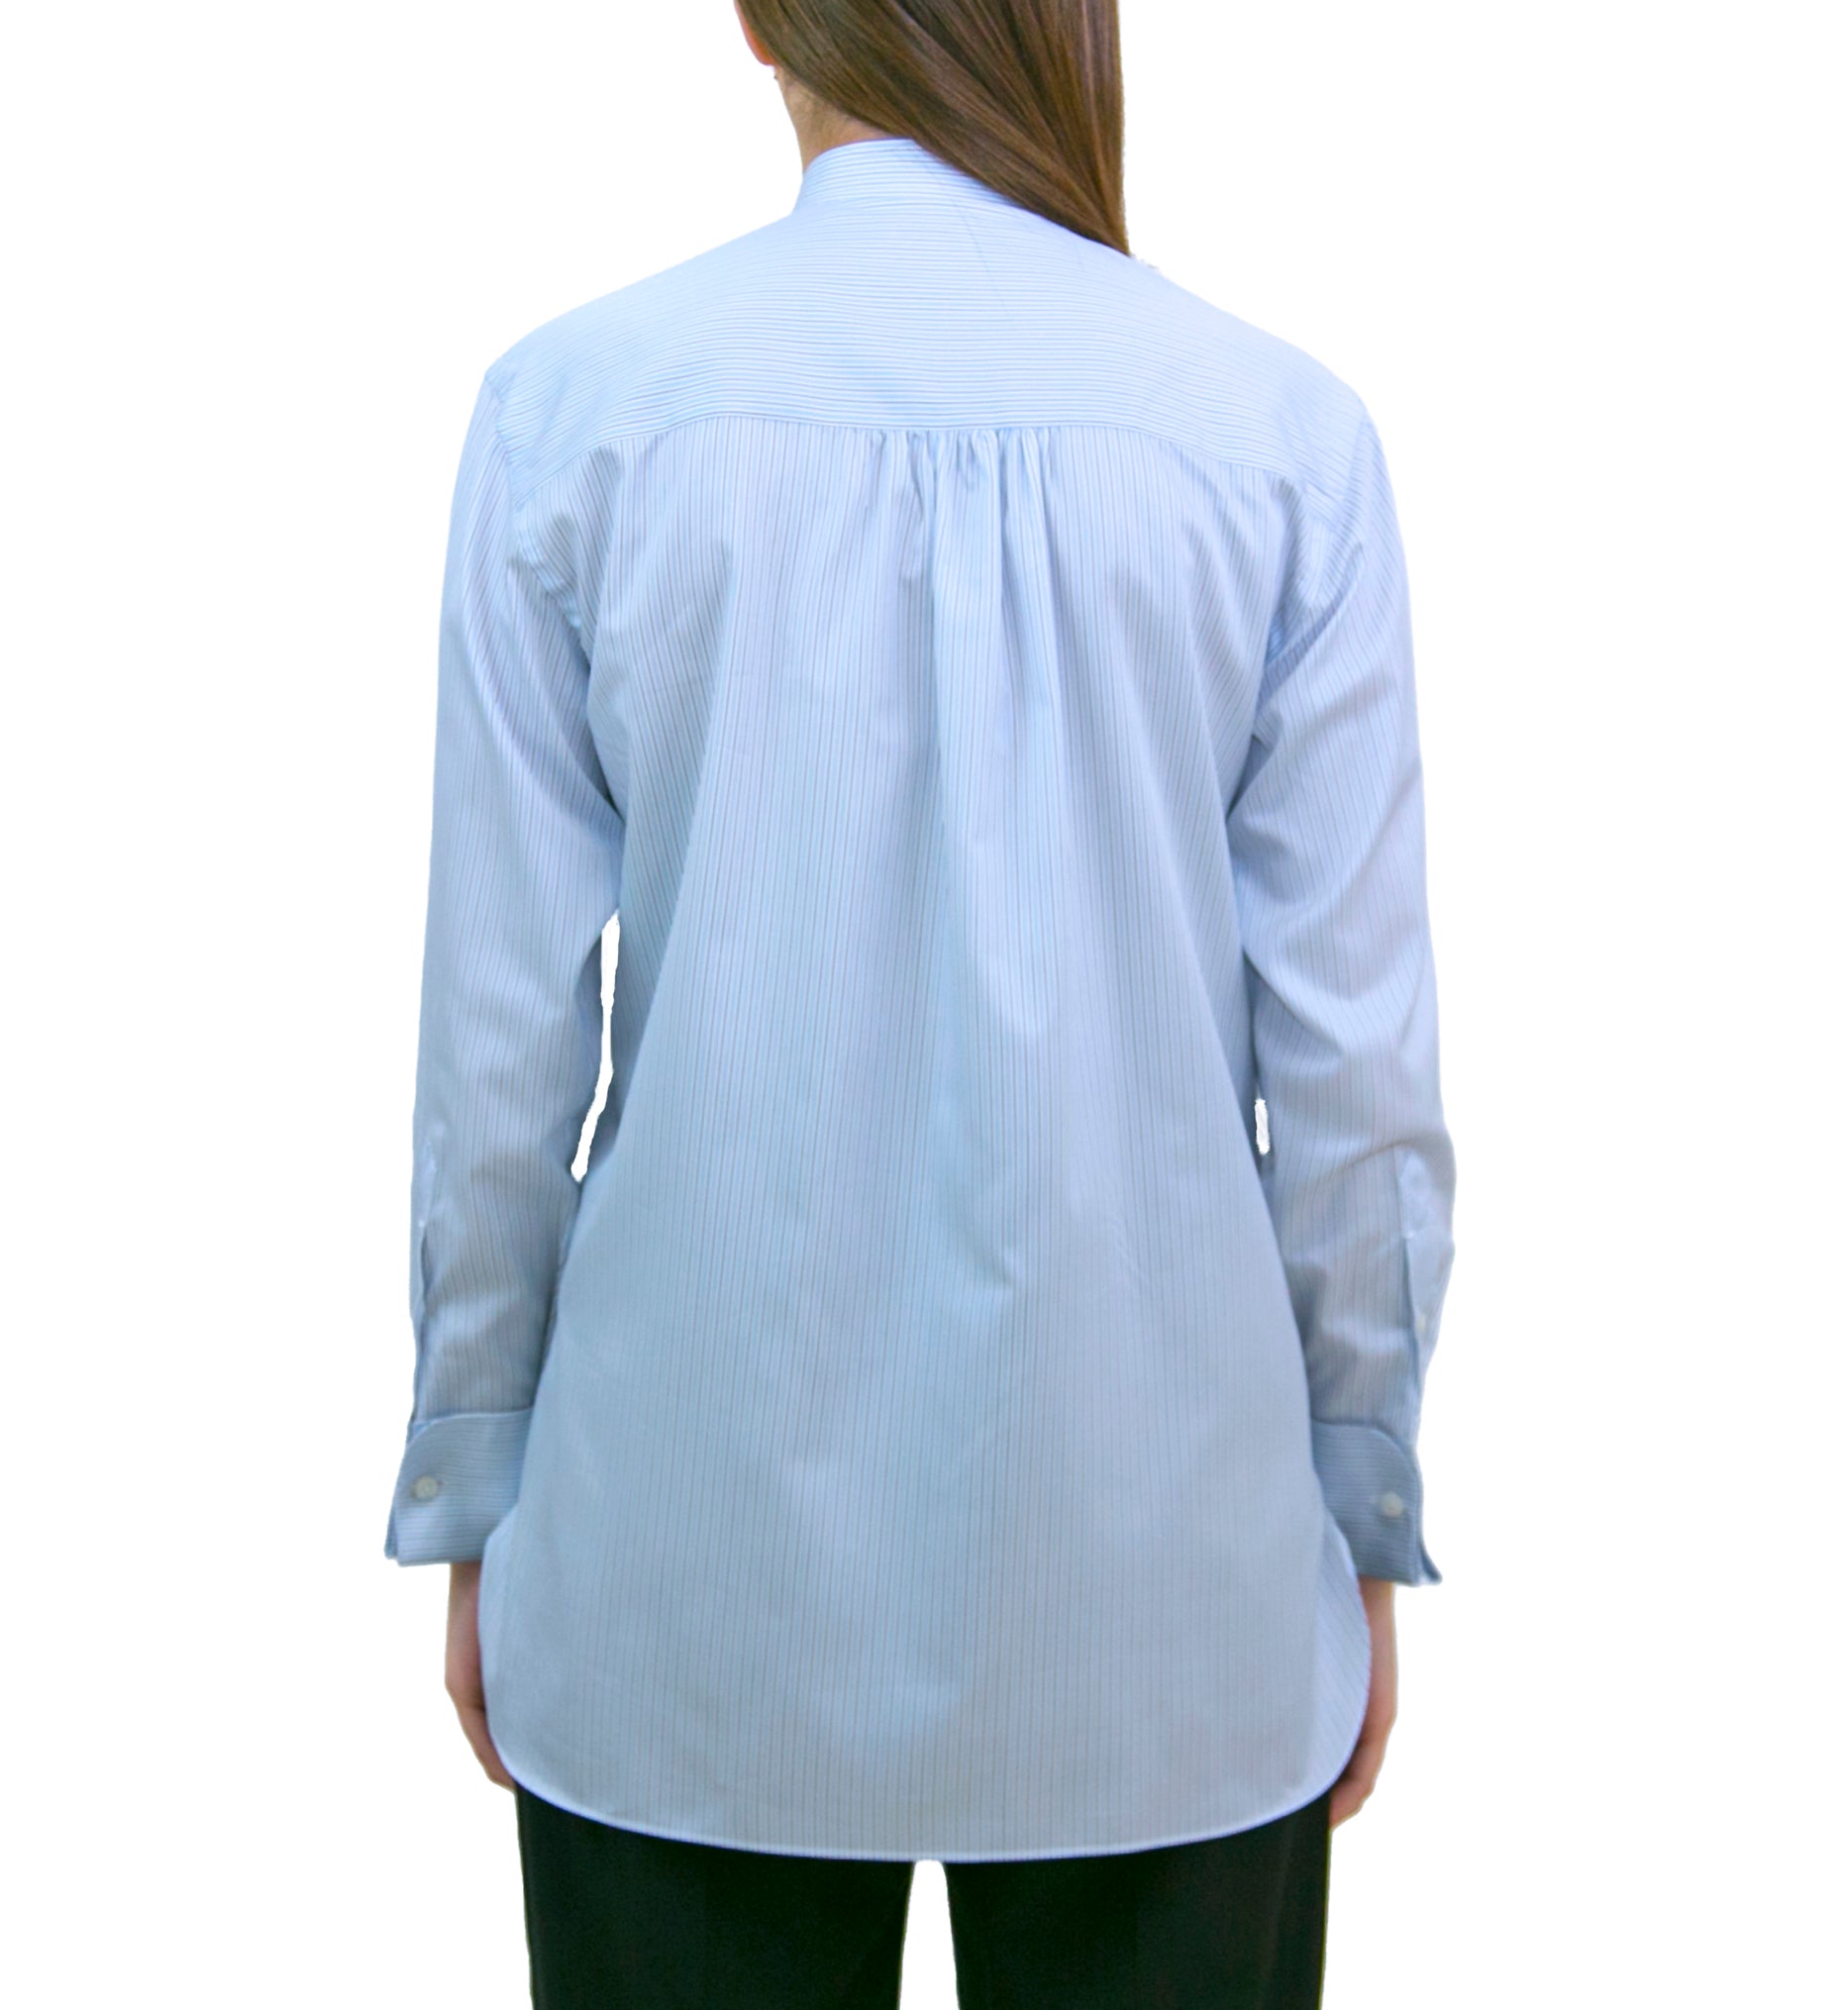 Ladies' shirt Delia "170 a due" white striped bottoms